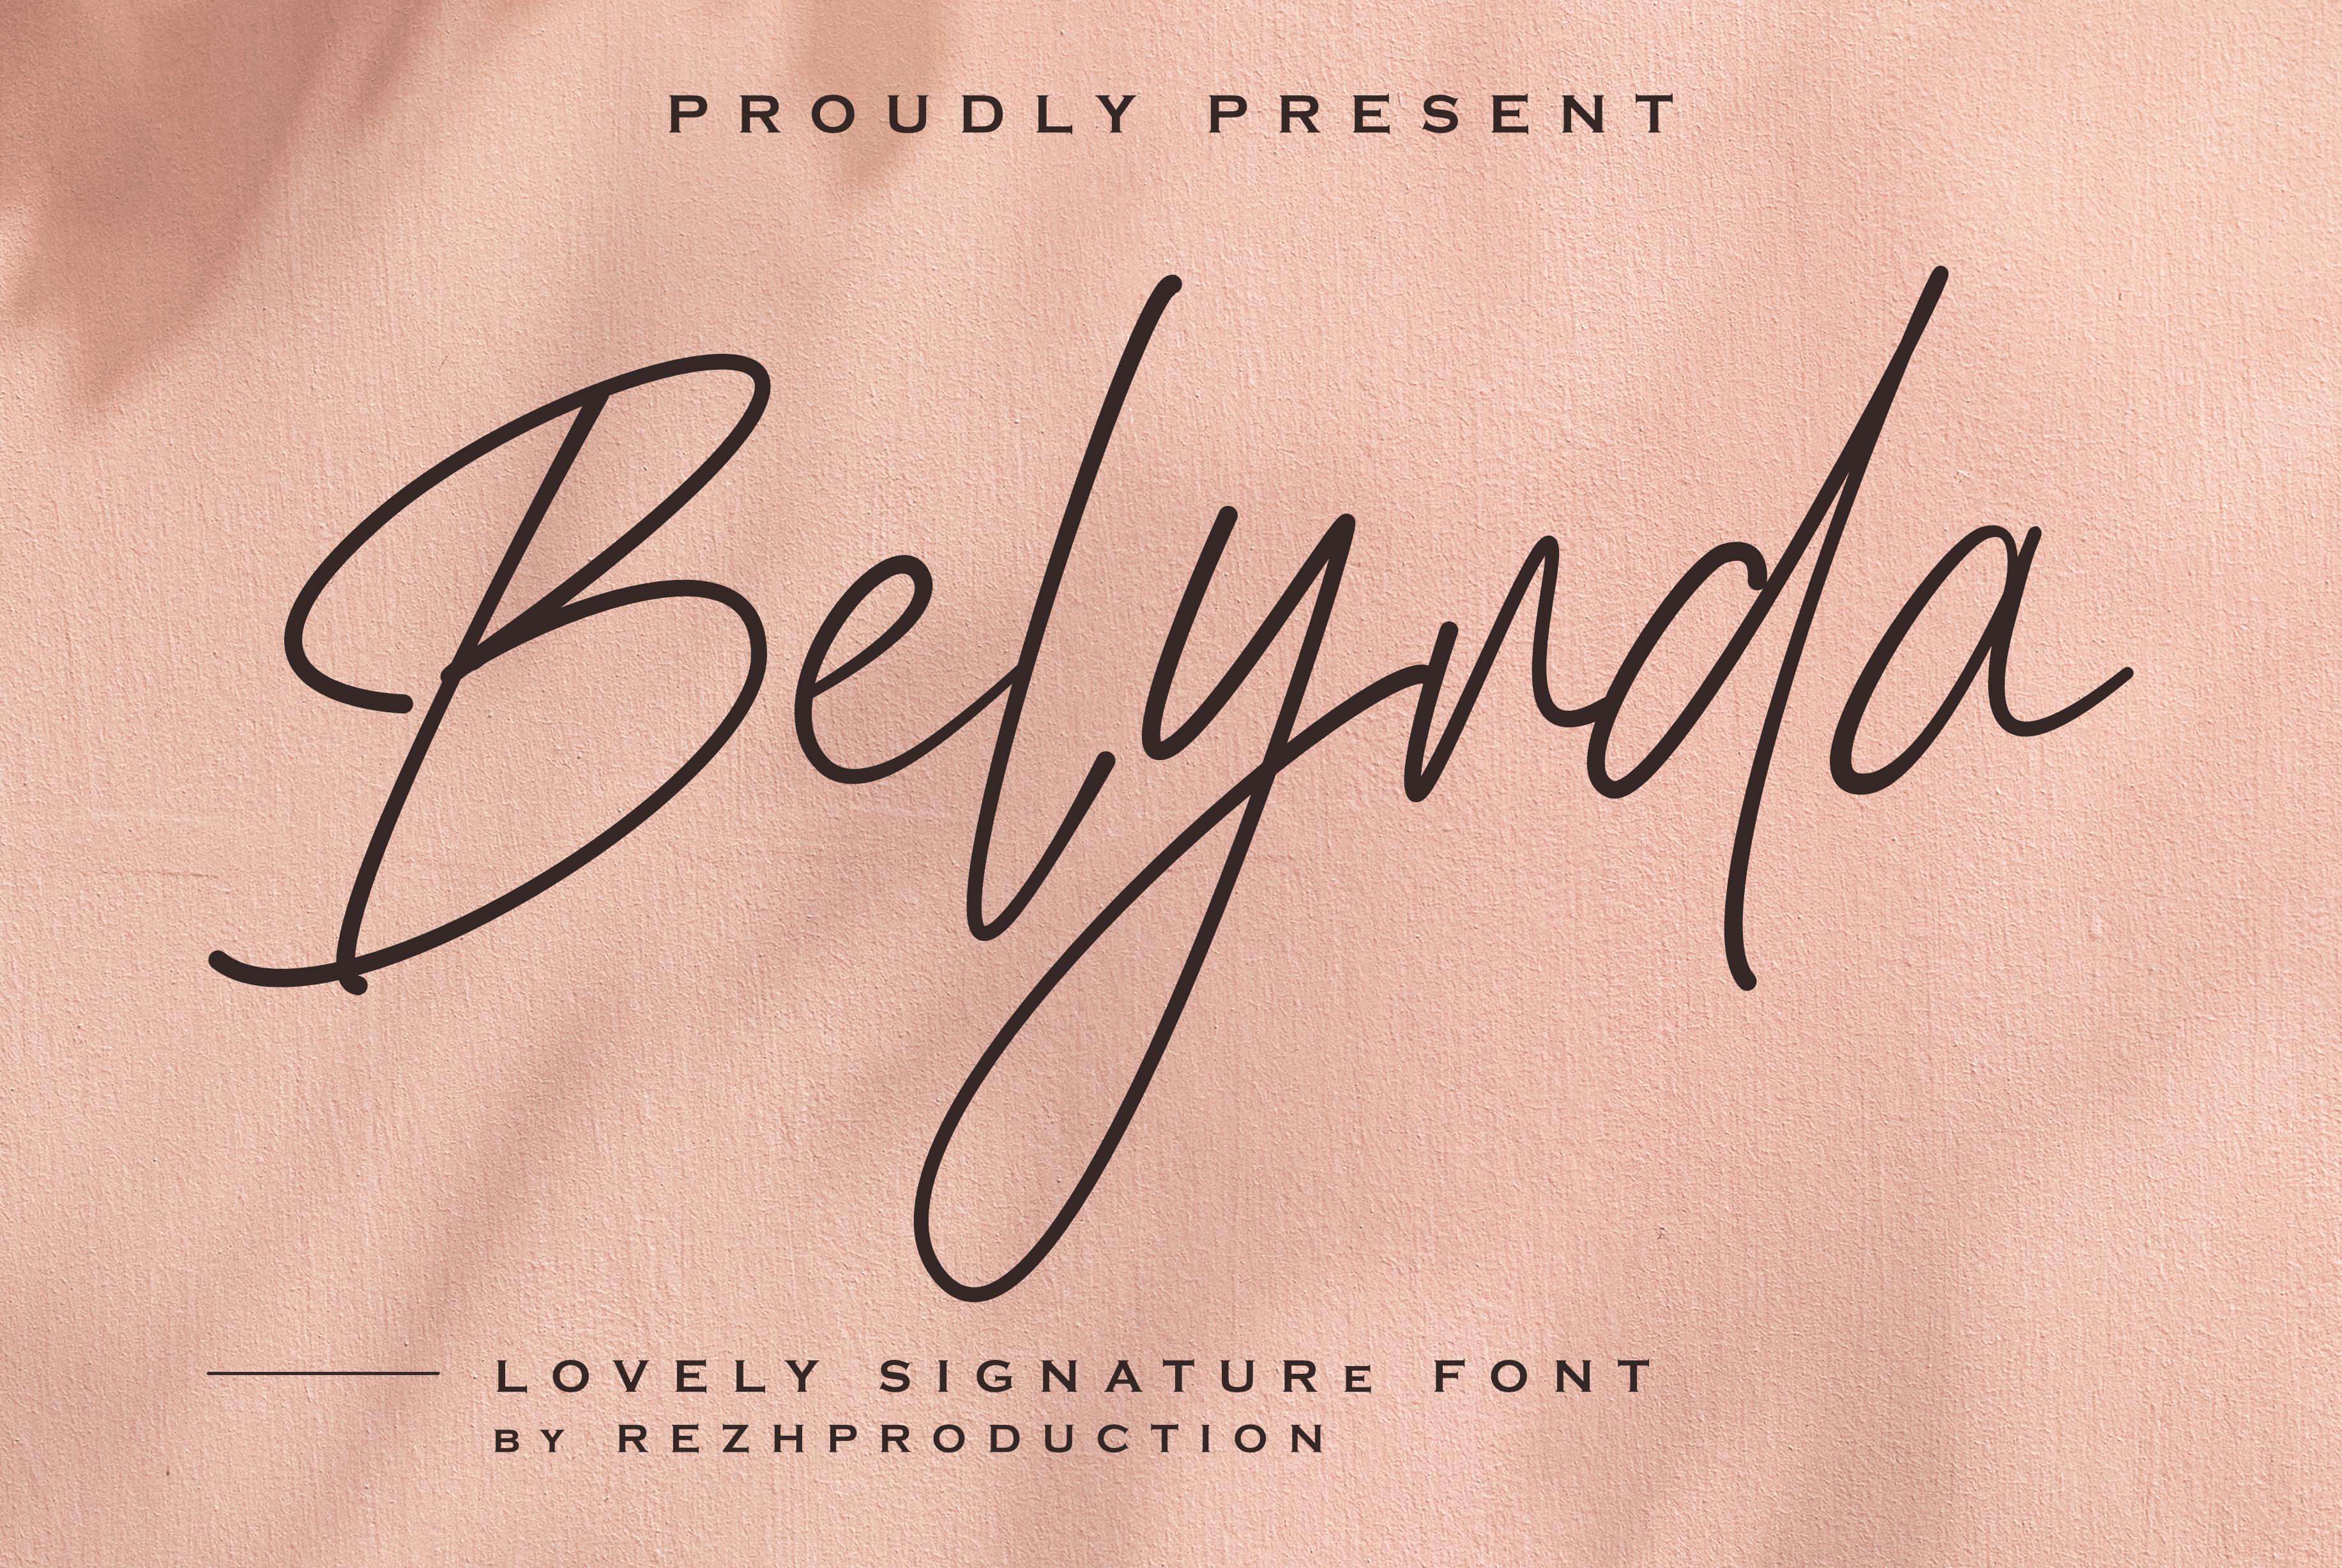 Belynda Font